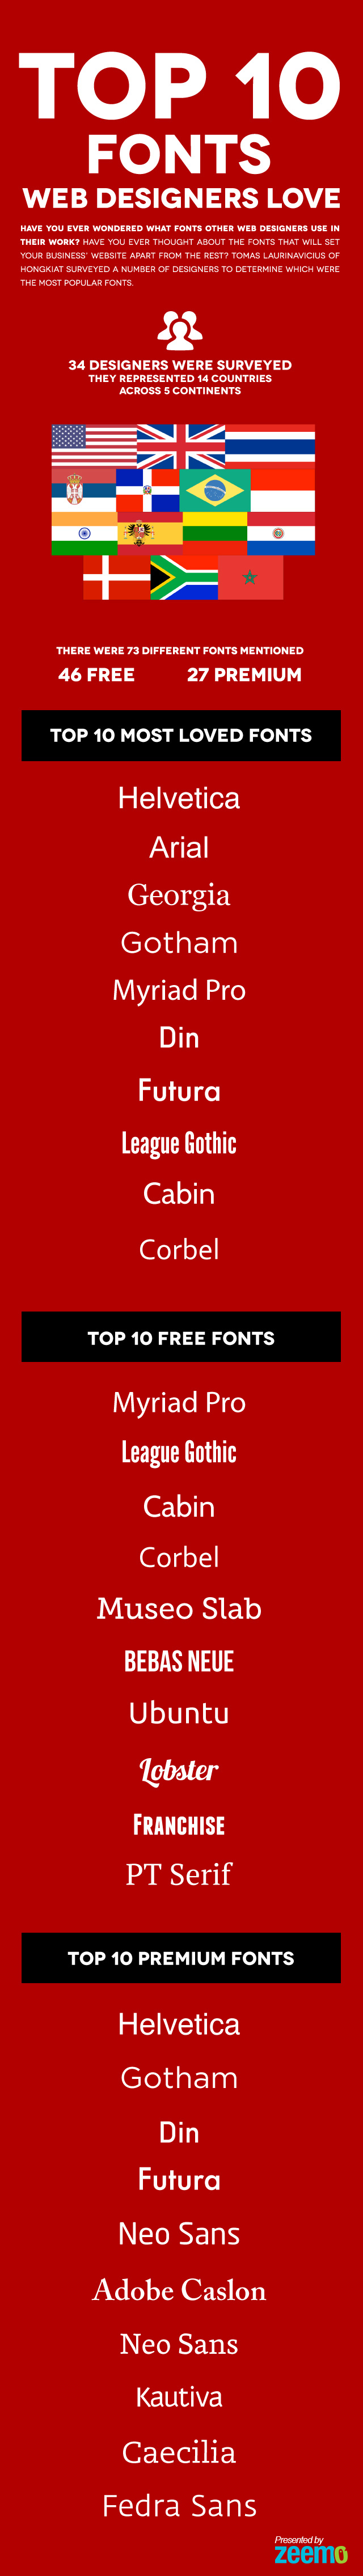 Top 10 fonts web designers love